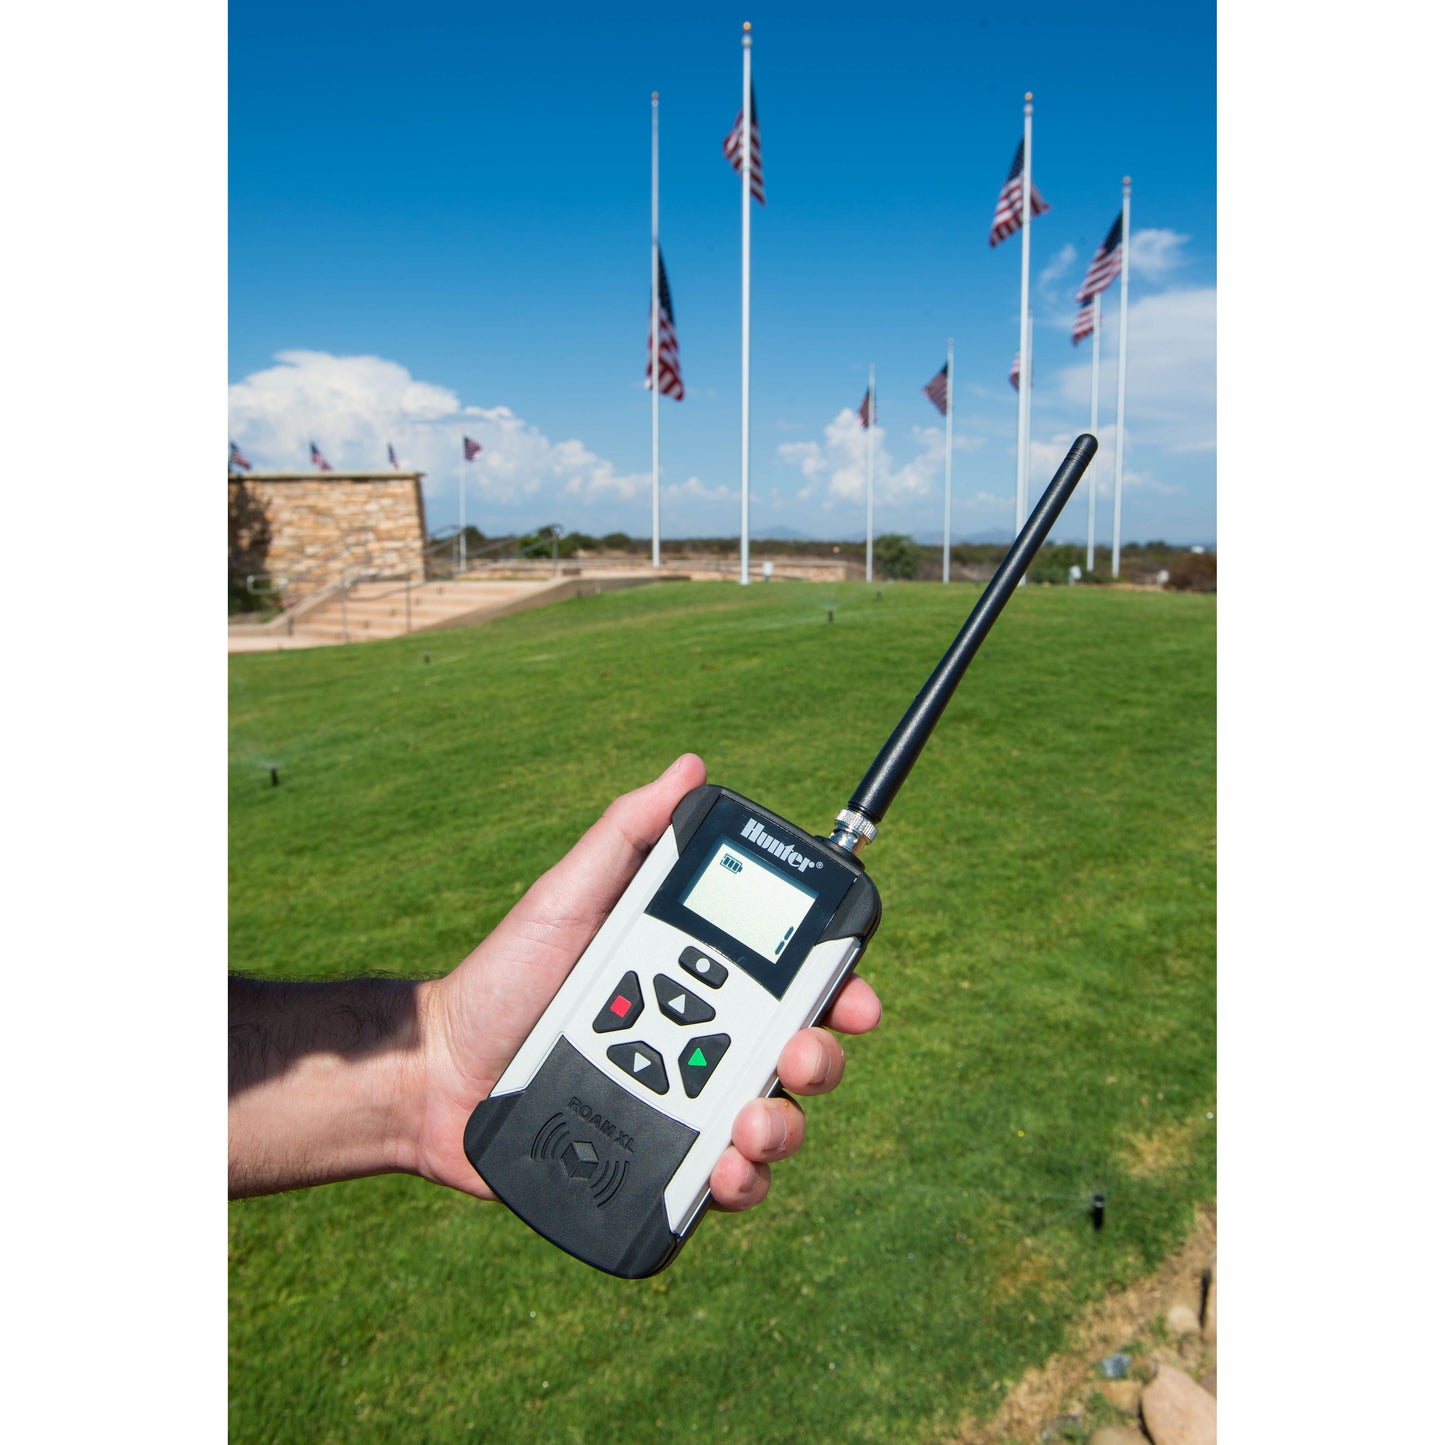 ROAM-XL-KIT - Long Range Remote Control Kit